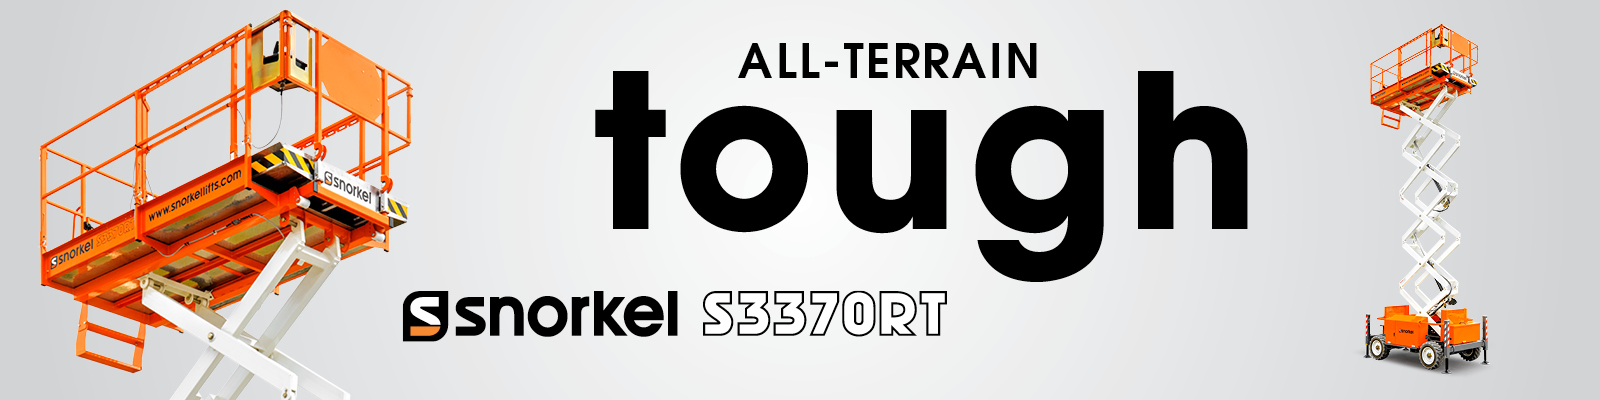 All-Terrain Tough - Snorkel S3370RT rough terrain diesel scissor lift